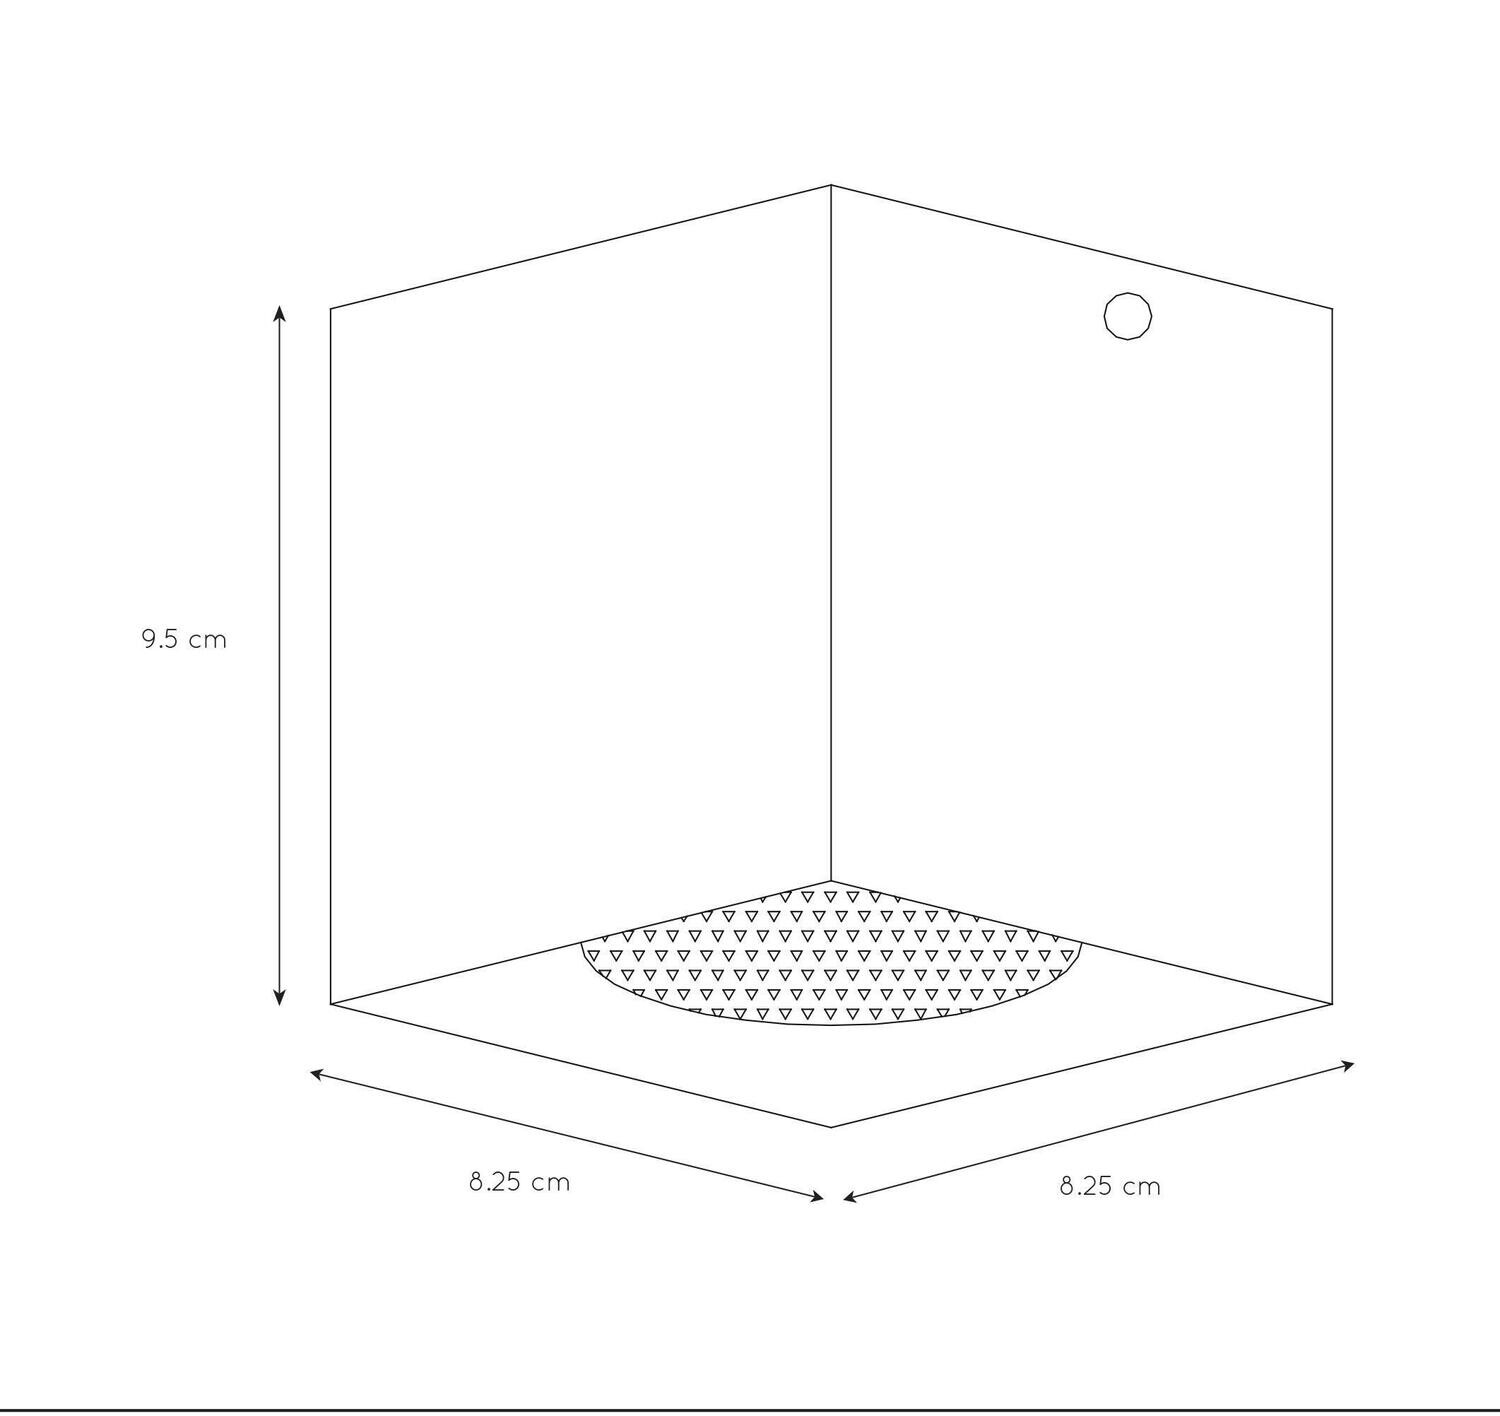 BODI Ceiling Light Square GU10 8.2x8.2 cm Black (LED lightsource included)